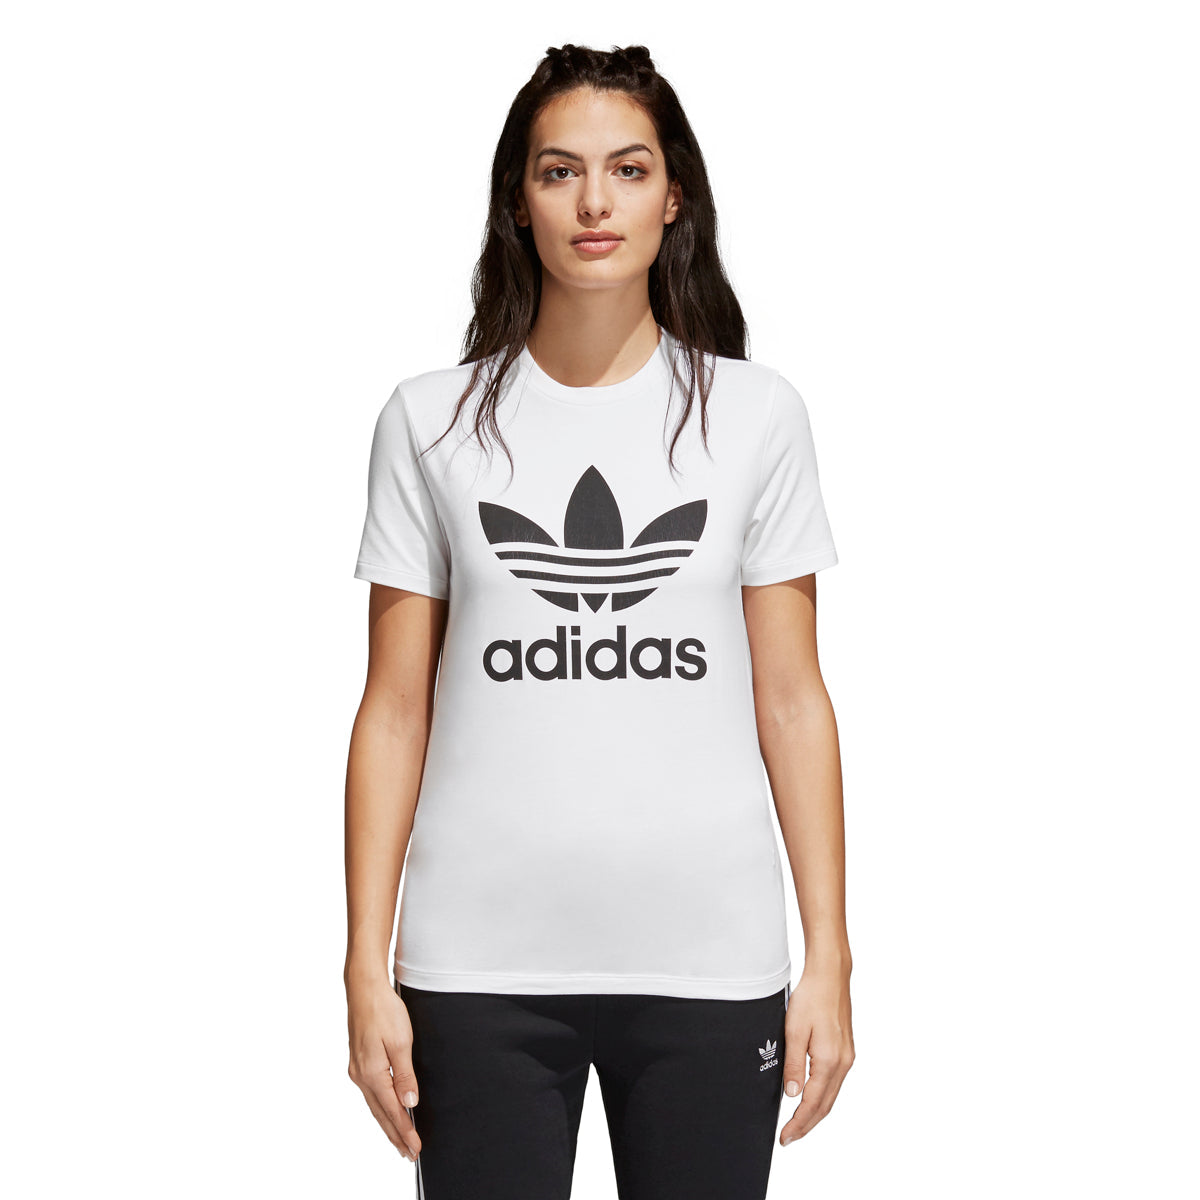 Adidas Originals Trefoil Tee Women's Shirt White/Black – Sports Plaza NY